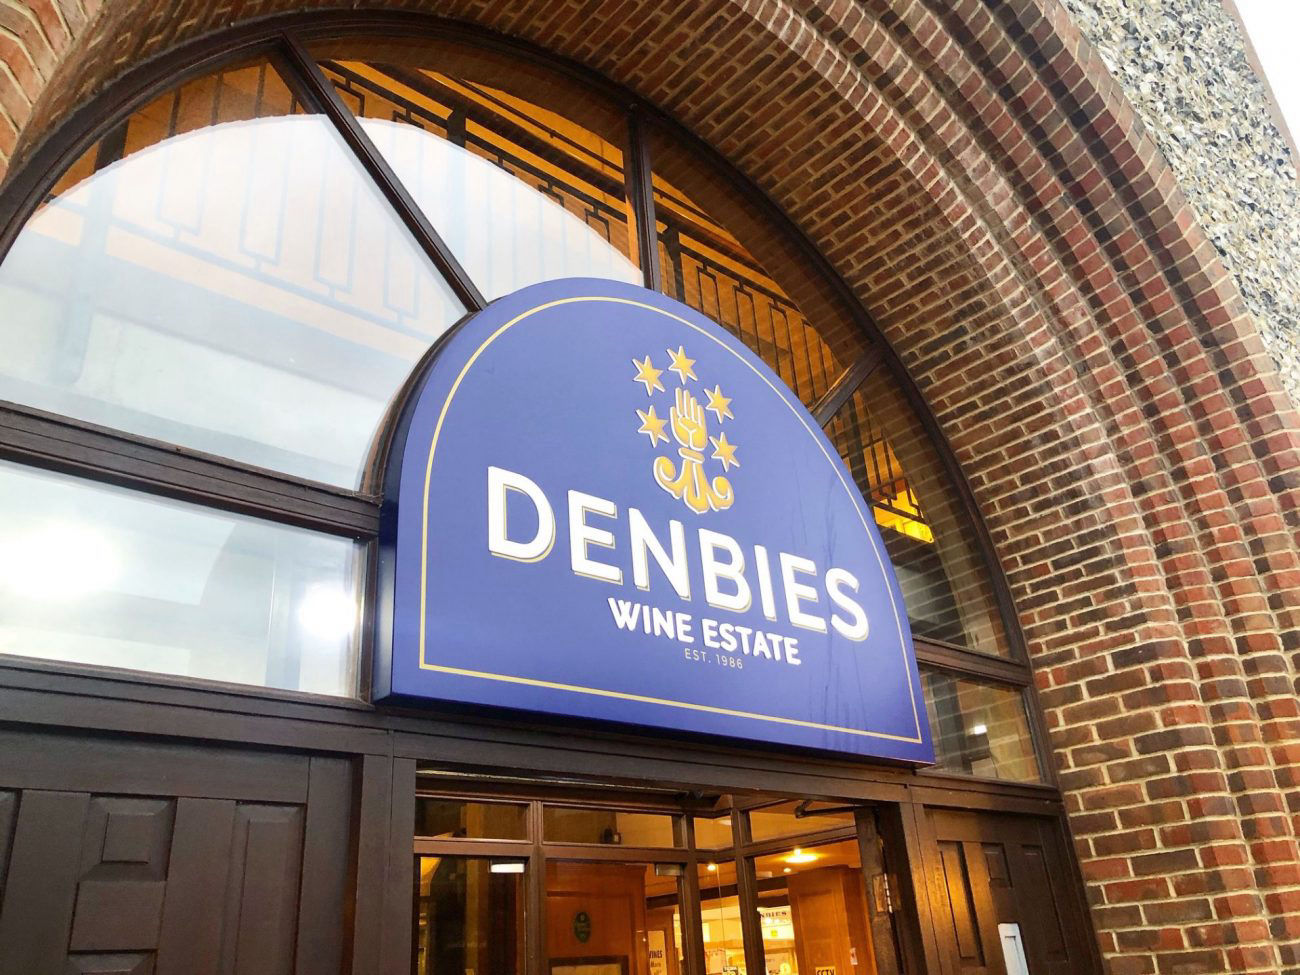 Denbies Wine Estate, Dorking, Surrey, UK.